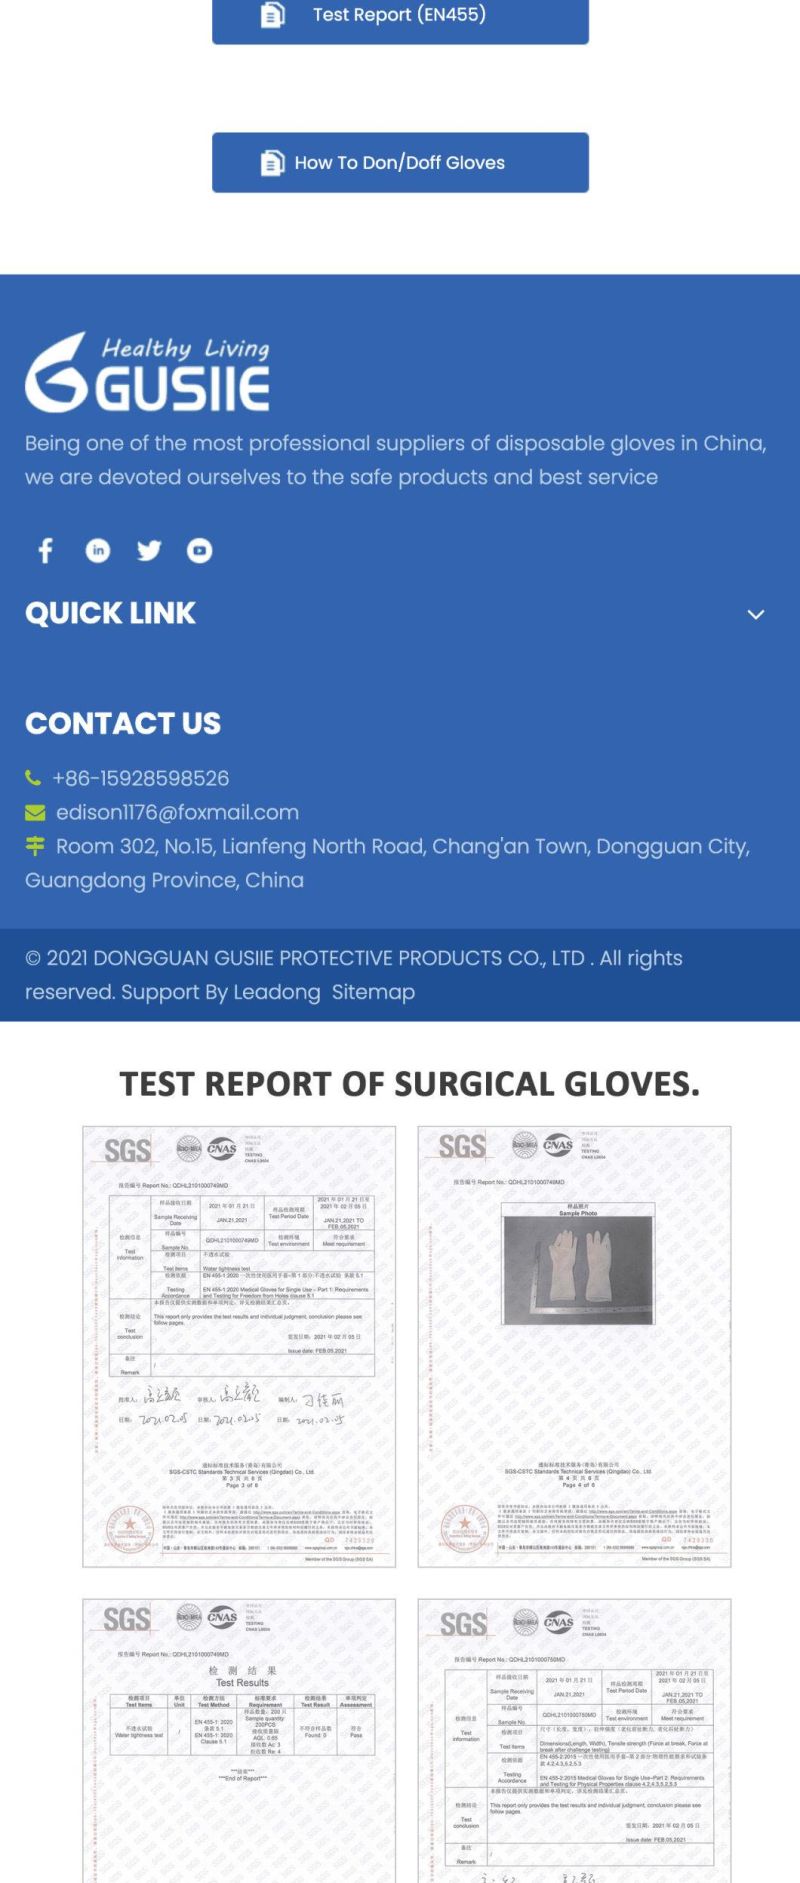 Medical Glove Sterilized Latex Gloves Powdered or Powdered-Free Latex Gloves